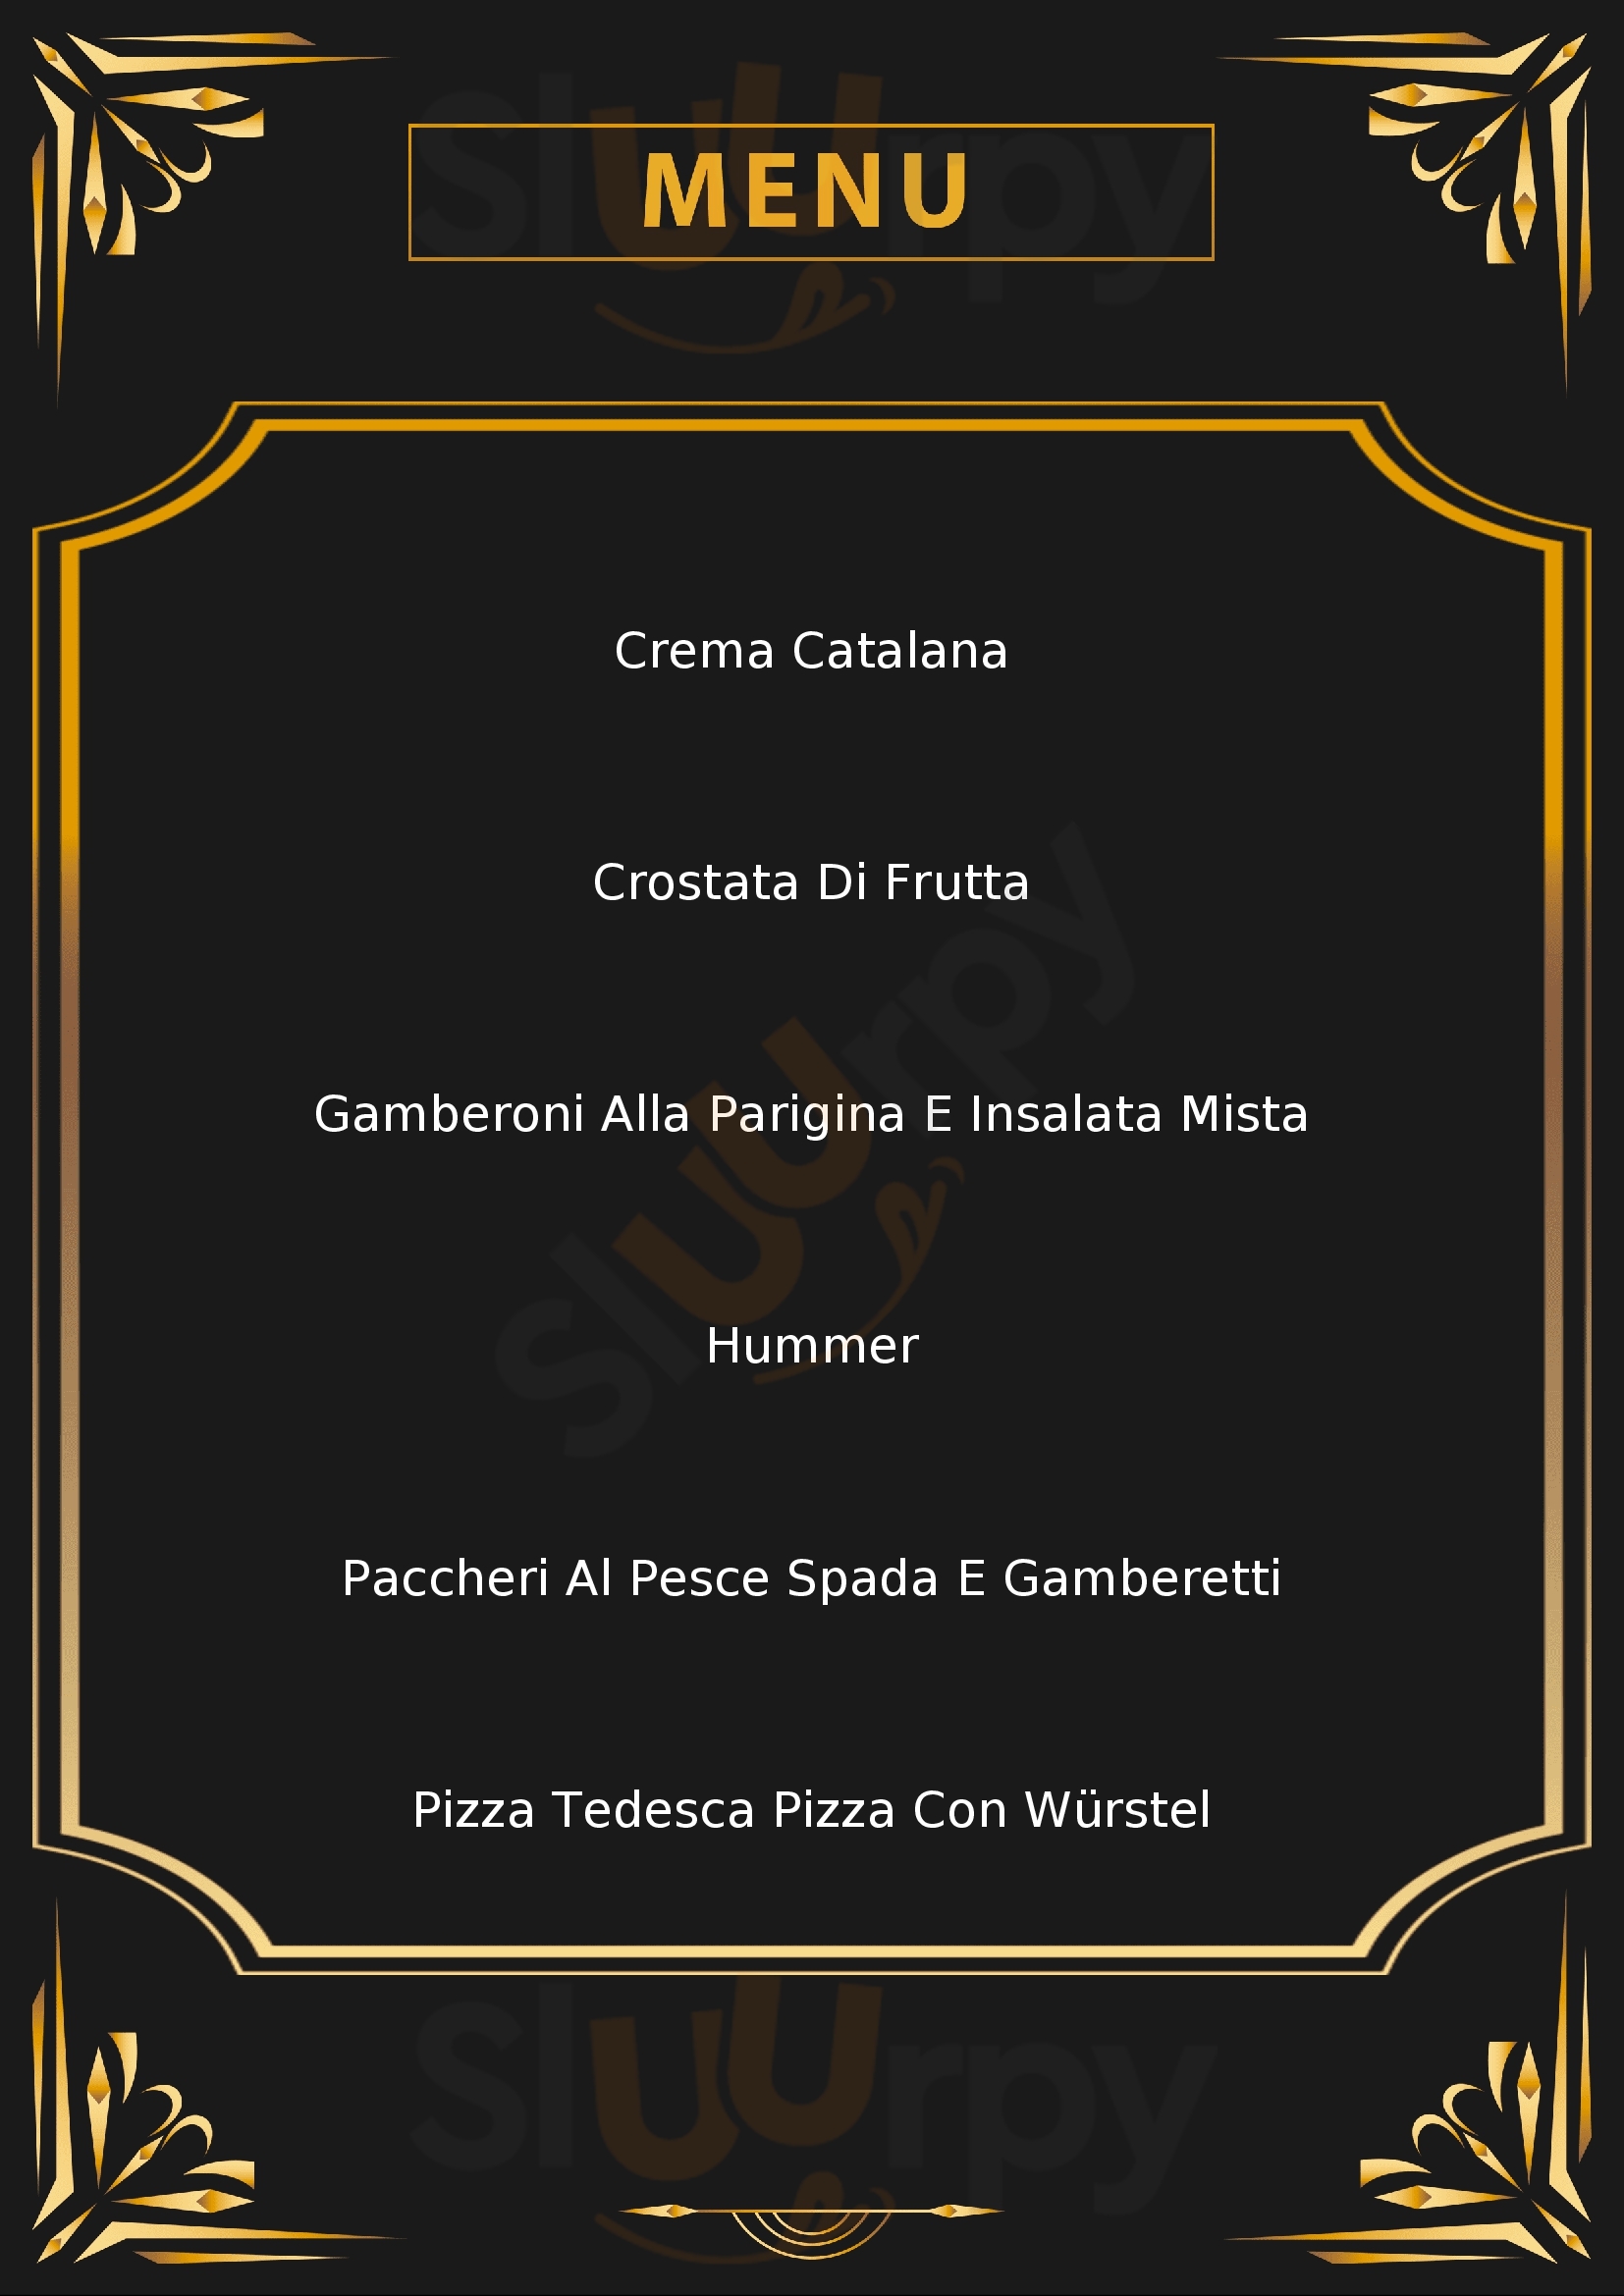 Ristorante pizzeria "L'Acquario" Santhia menù 1 pagina